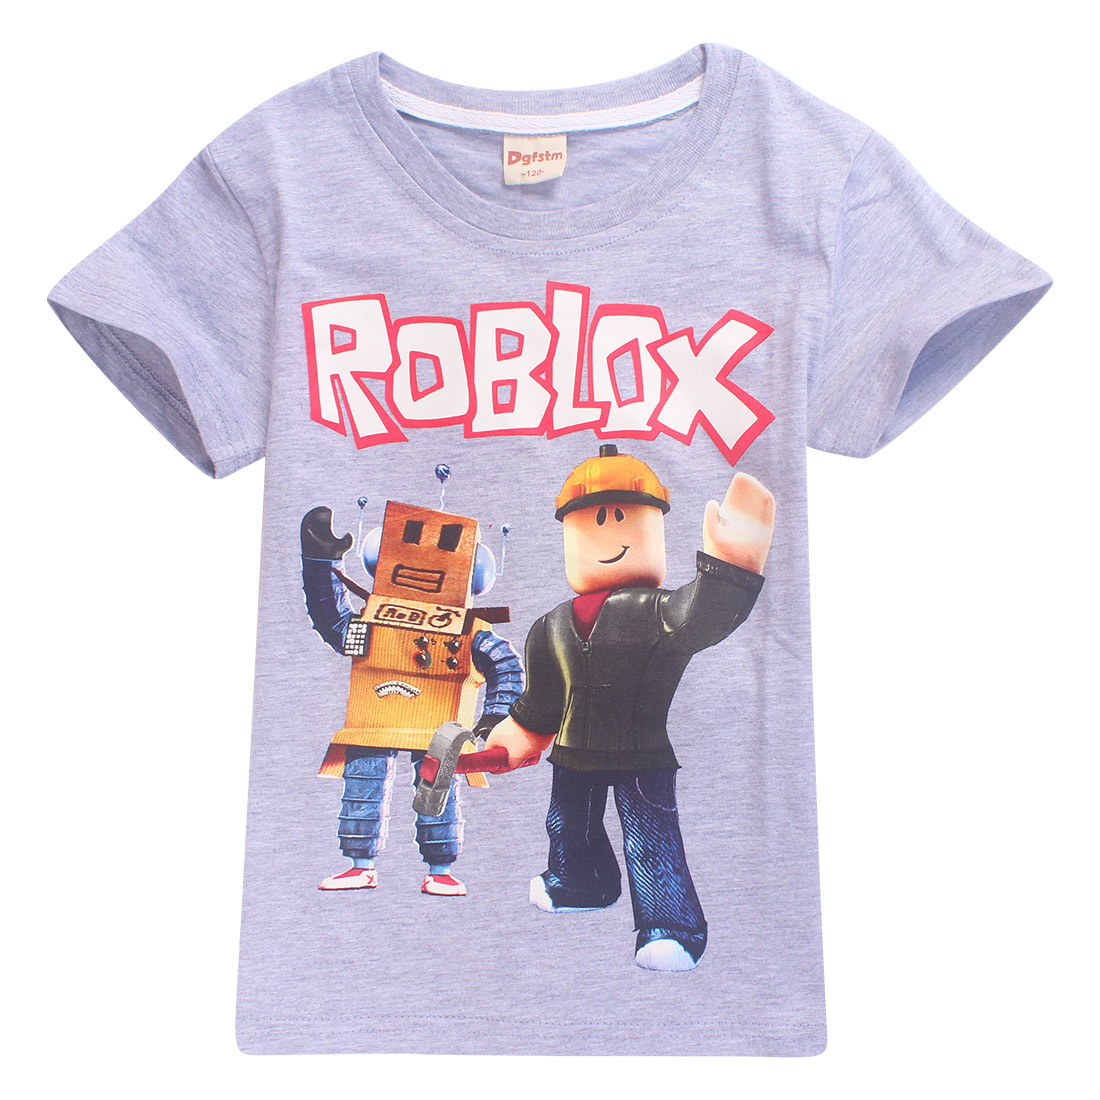 Roblox T Shirts For Kids Eyegemix Com - roblox baby yoda shirt